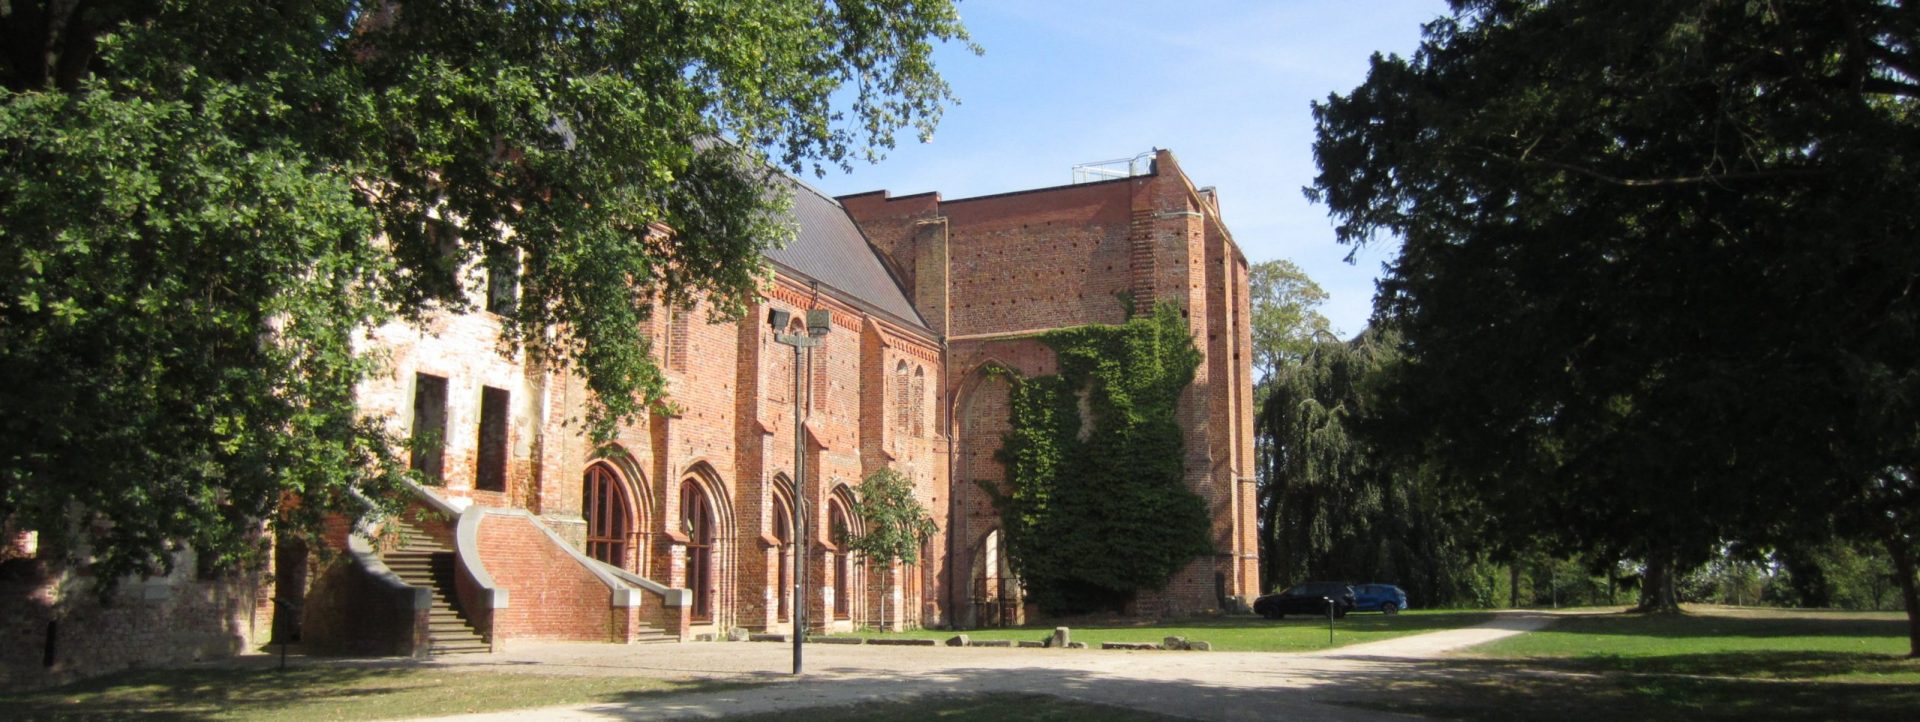 Förderverein Kloster-Schlosskomplex Dargun e.V.